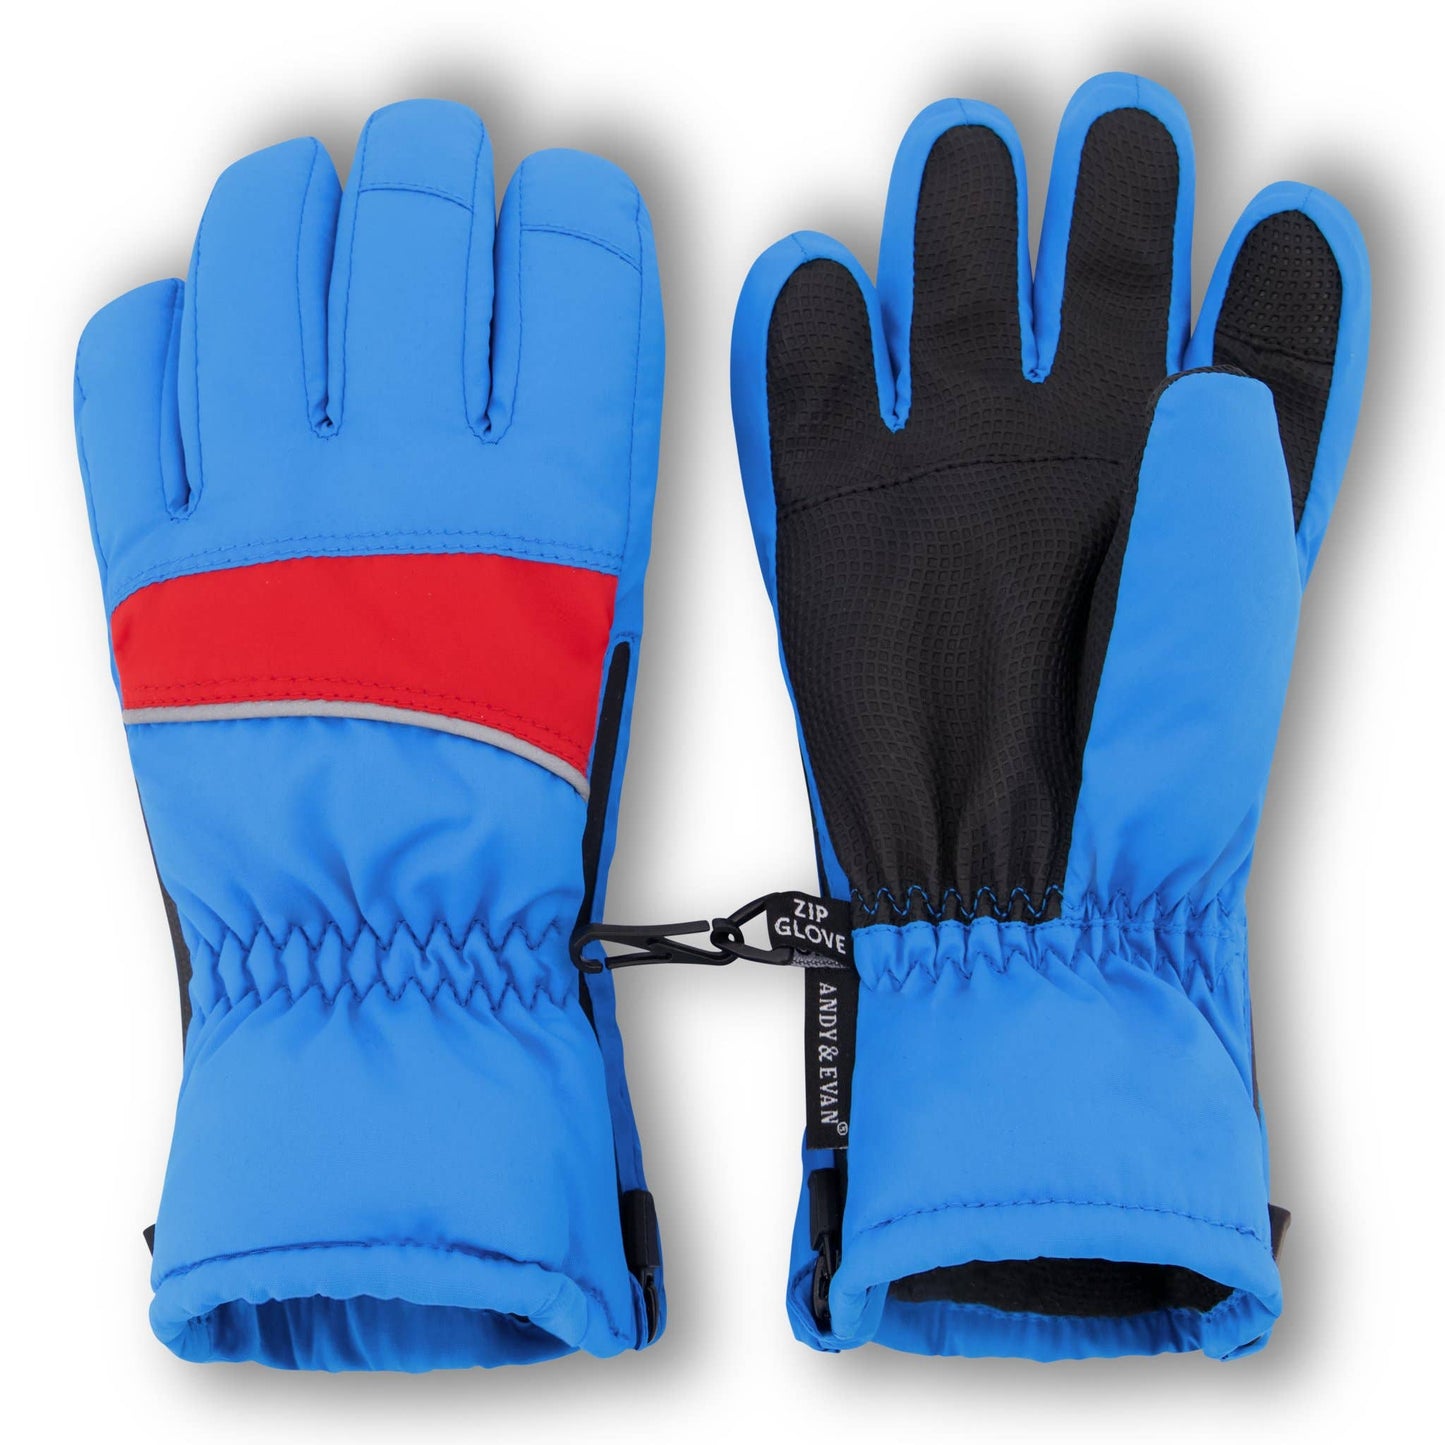 Winter & Ski Glove Powered by ZIPGLOVE™ TECHNOLOGY - Blue